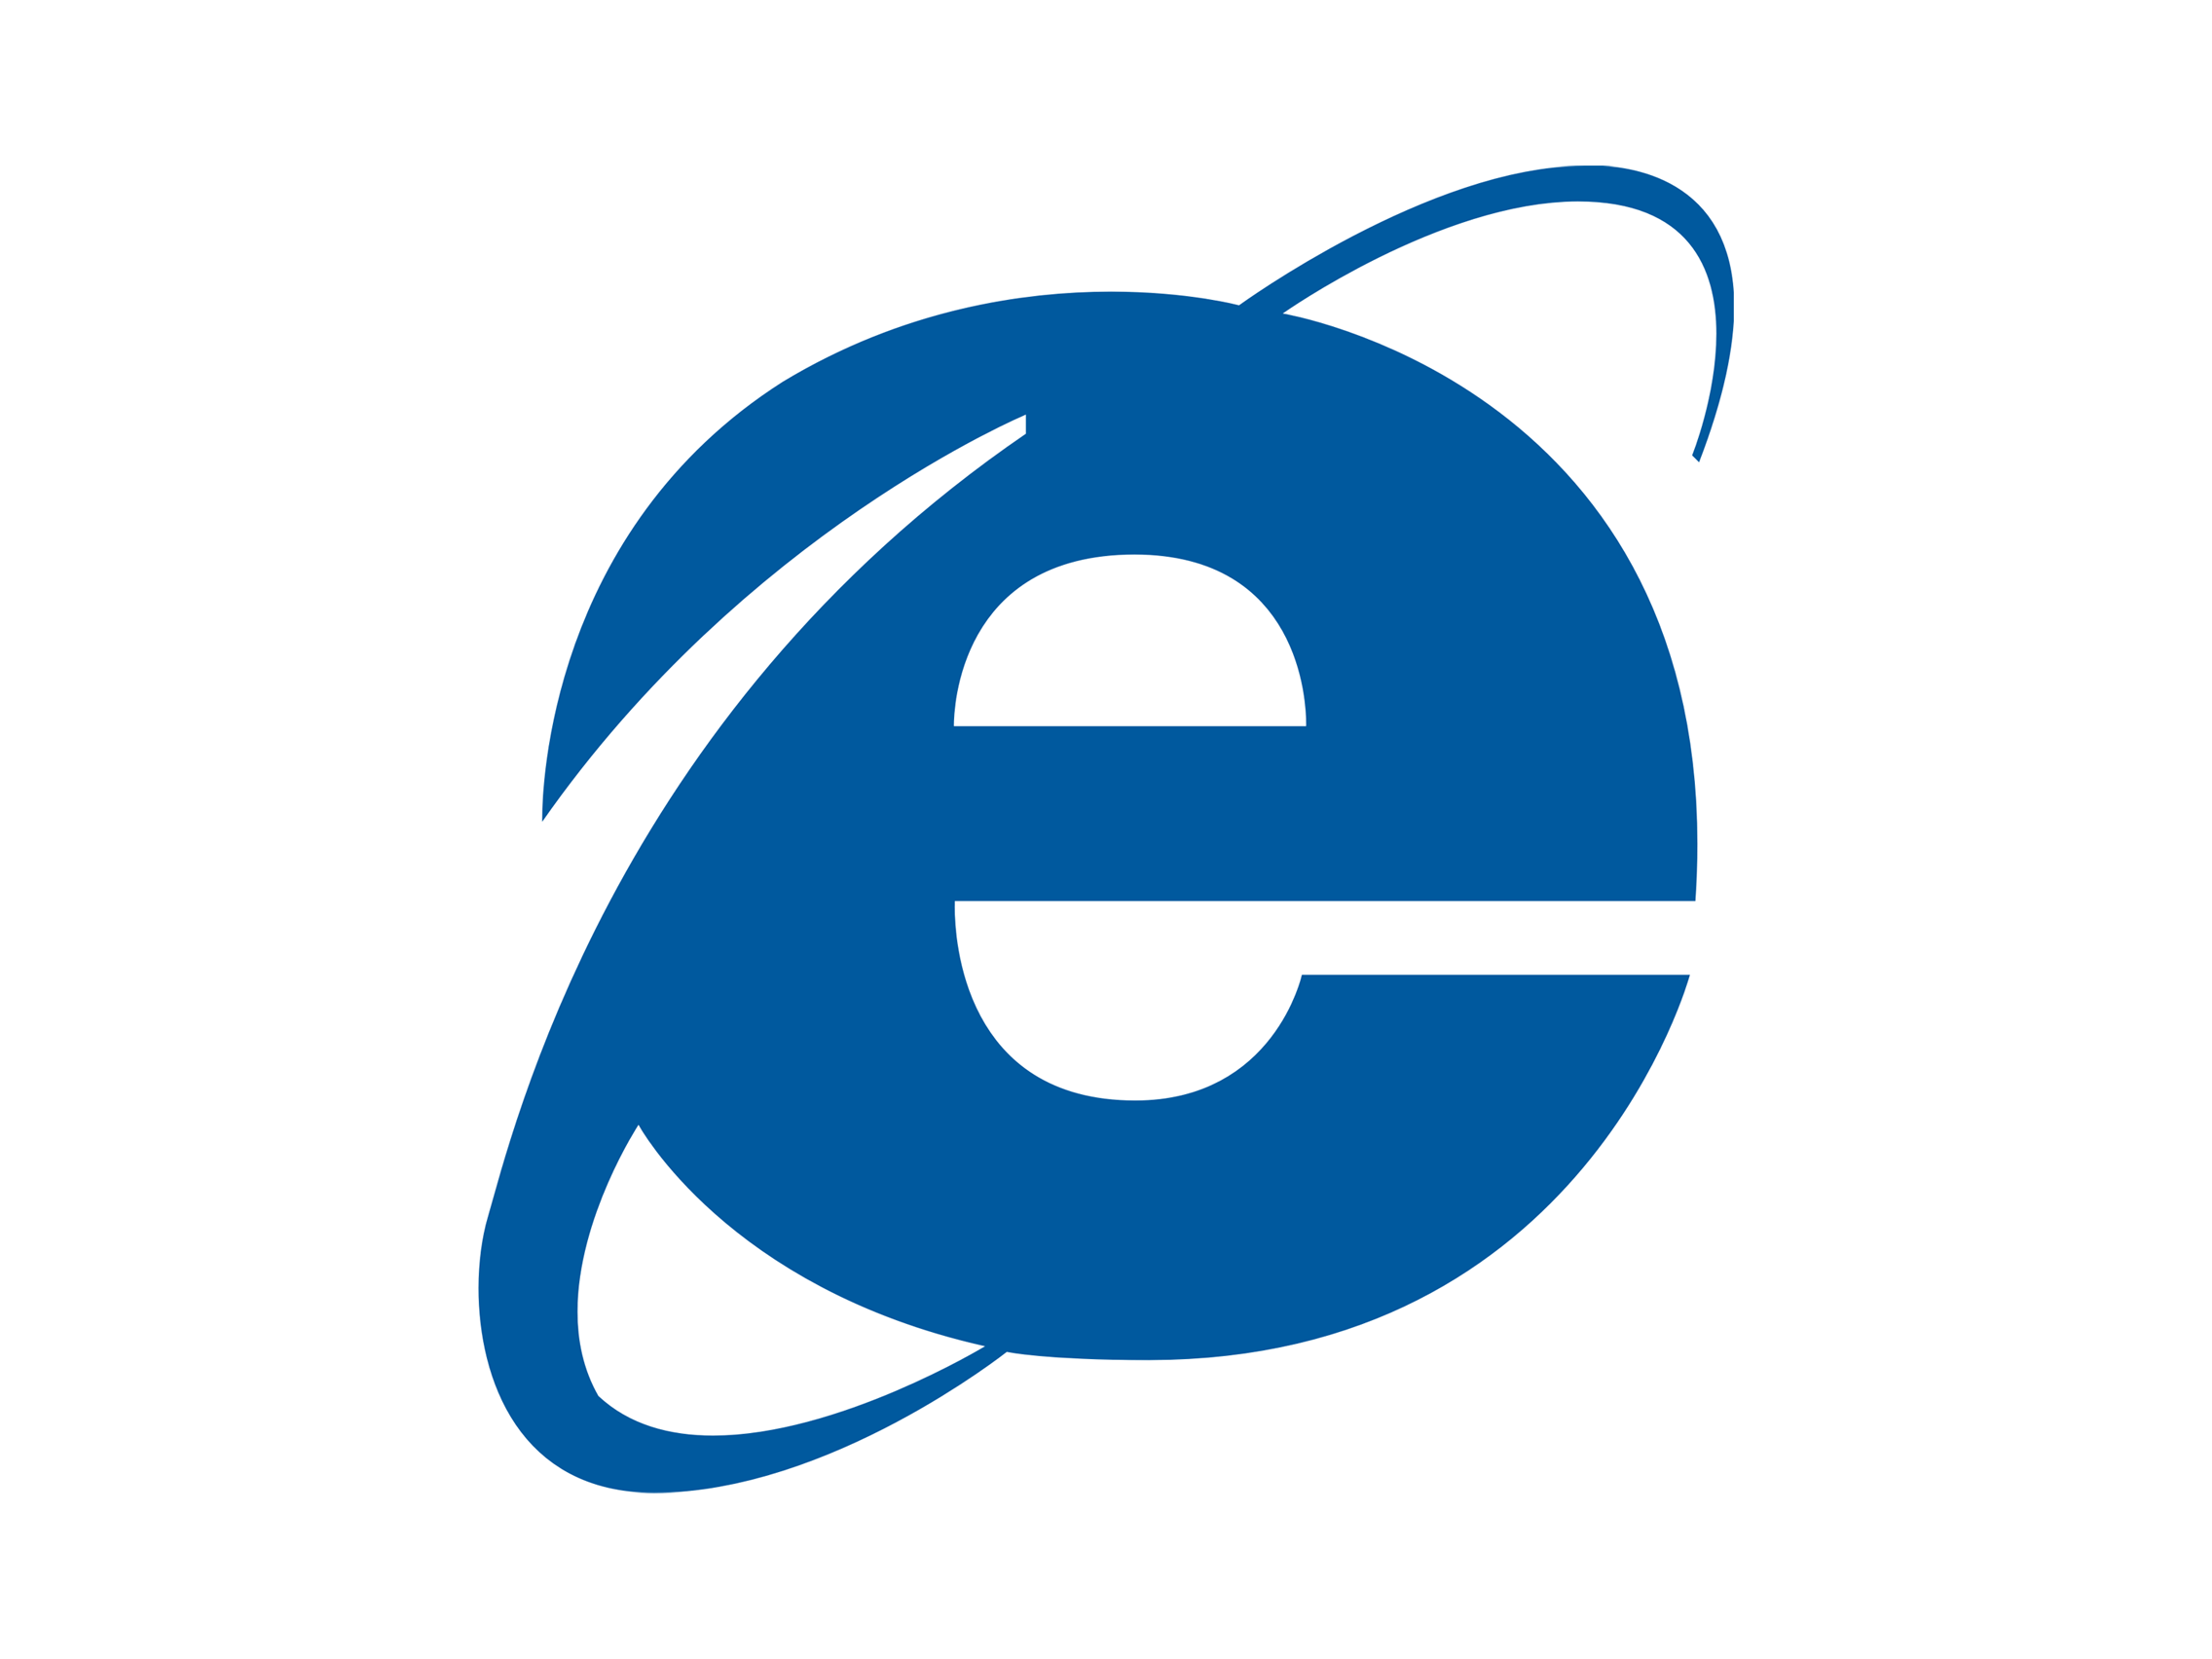 Internet Web Browser Logo - IE logo